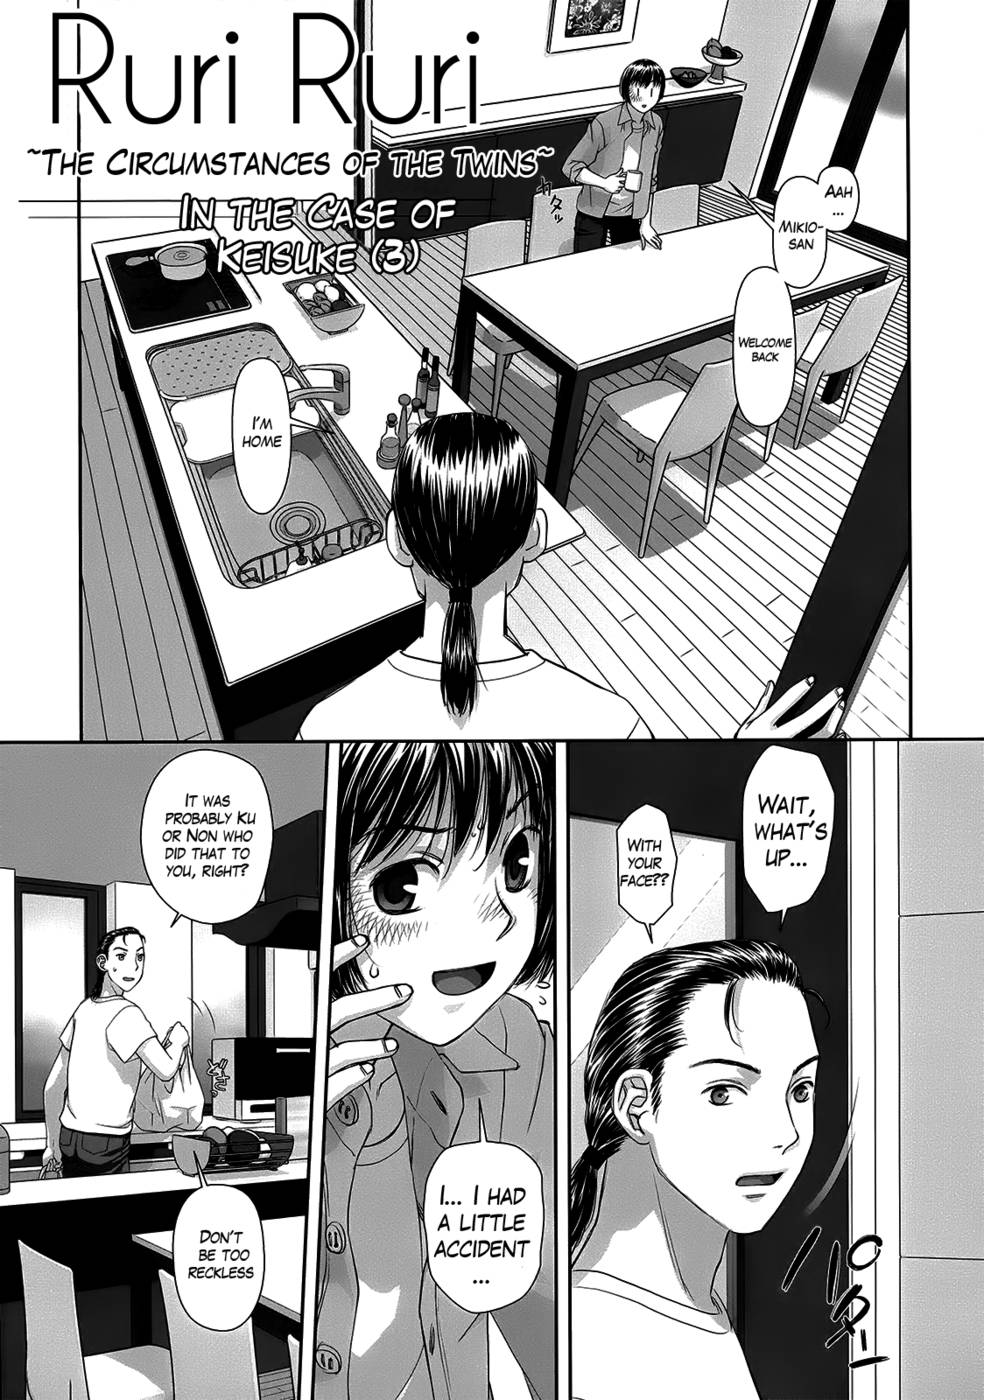 Hentai Manga Comic-Ruri Ruri-Chapter 12-End-The Circumstances Of The Twins- In The Case Of Keisuke 3-1